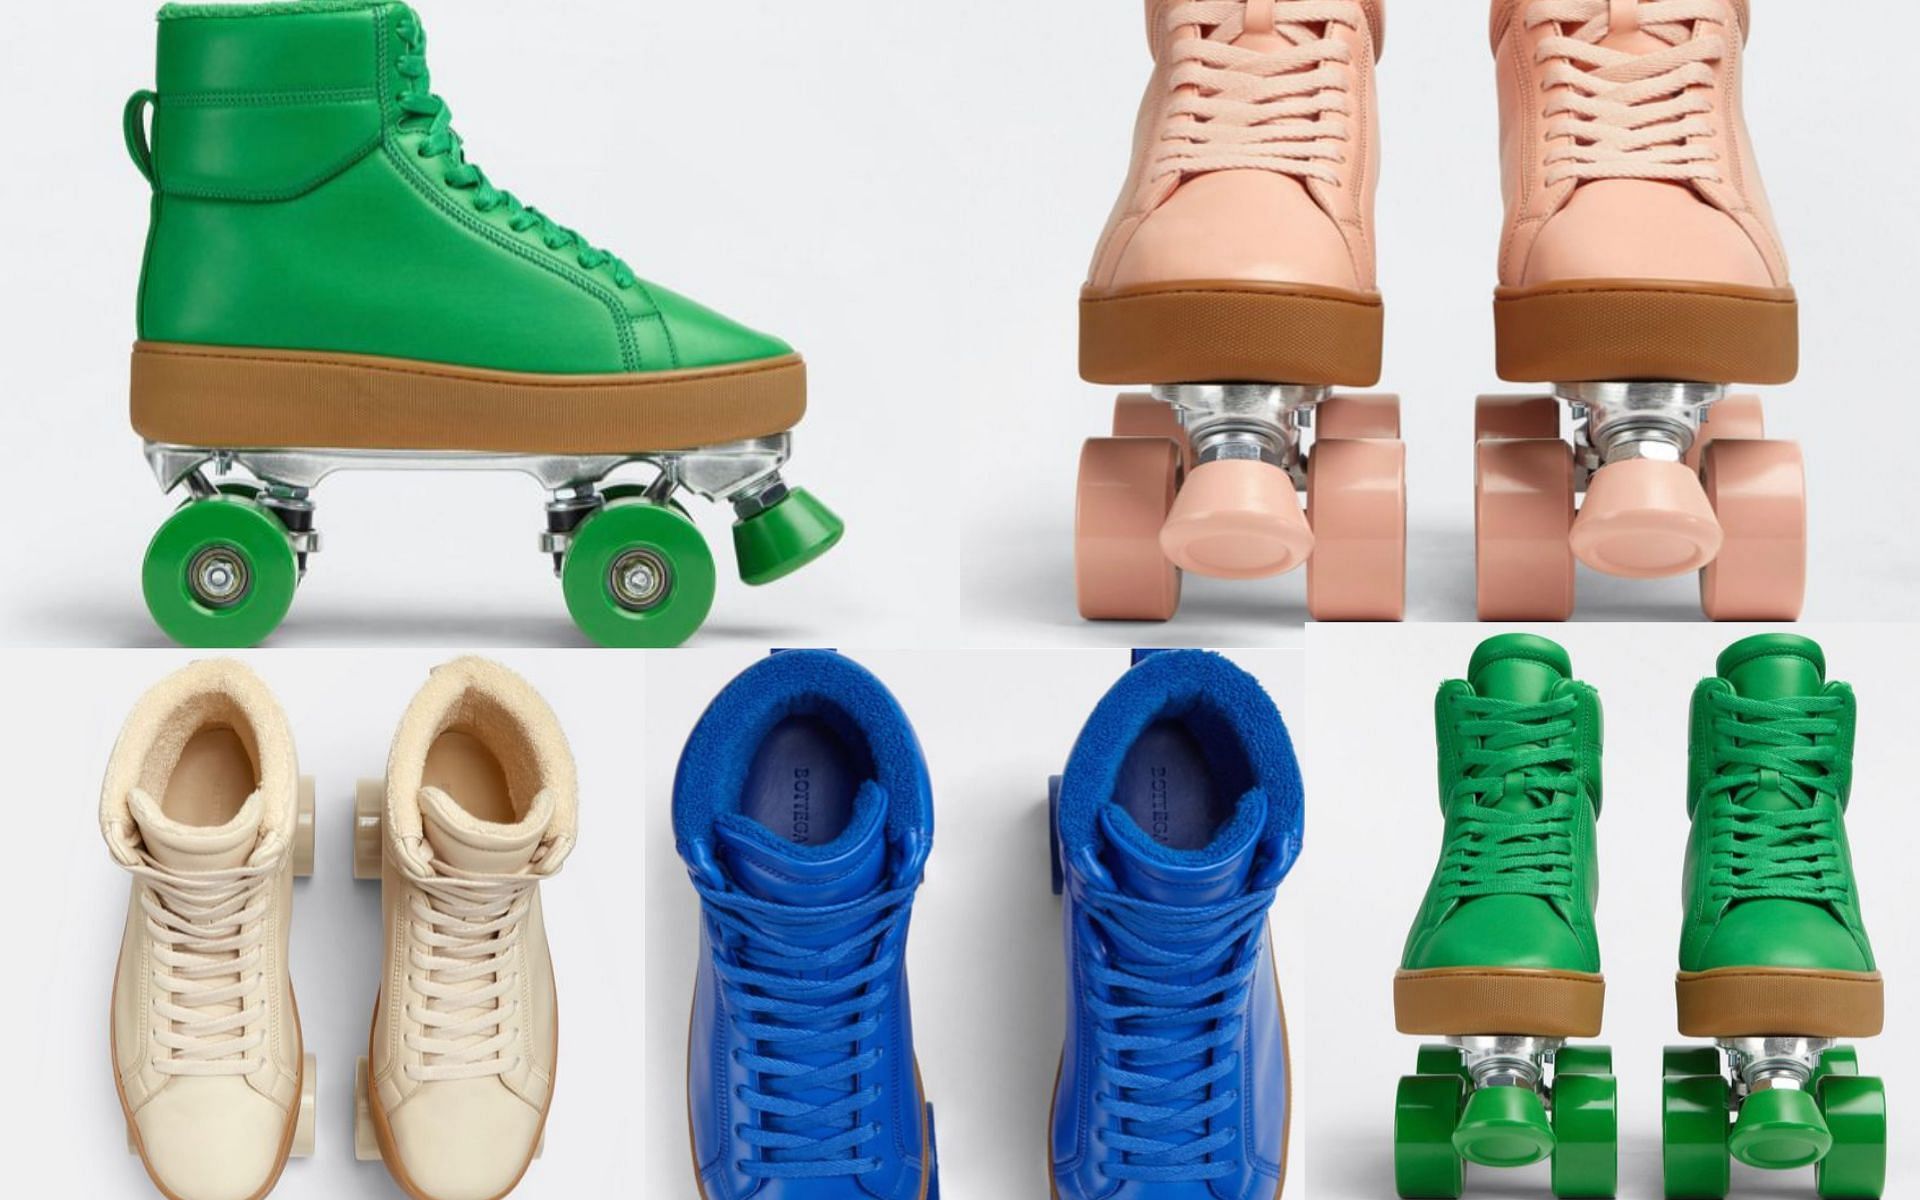 Bottega Veneta launched roller skates shoes in four shades (Image via Bottega Veneta)